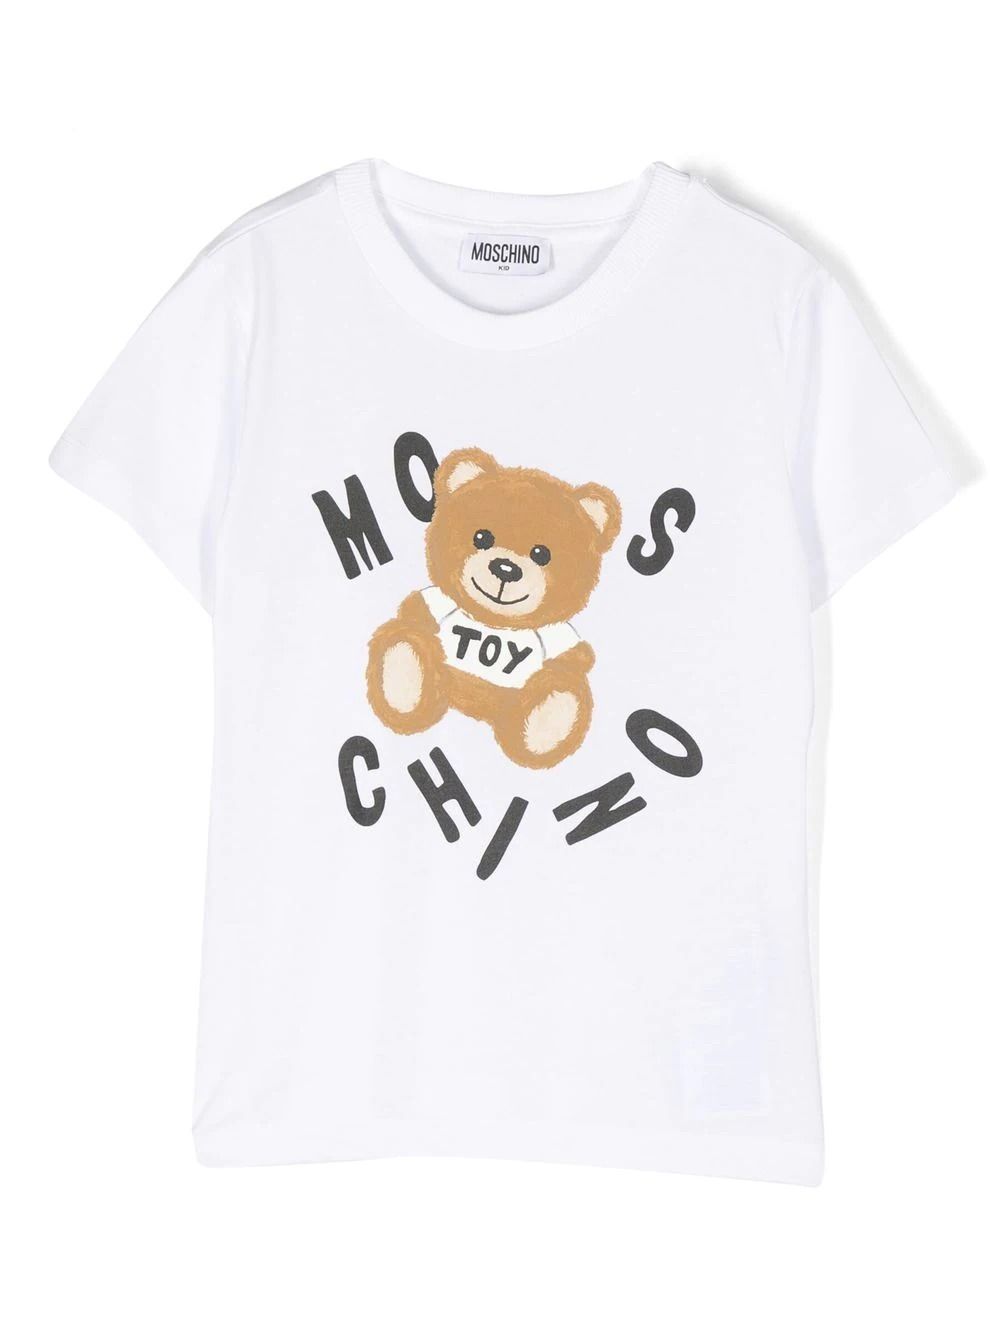 Moschino Kids Teddy Bear-motif cotton sweatshirt - White